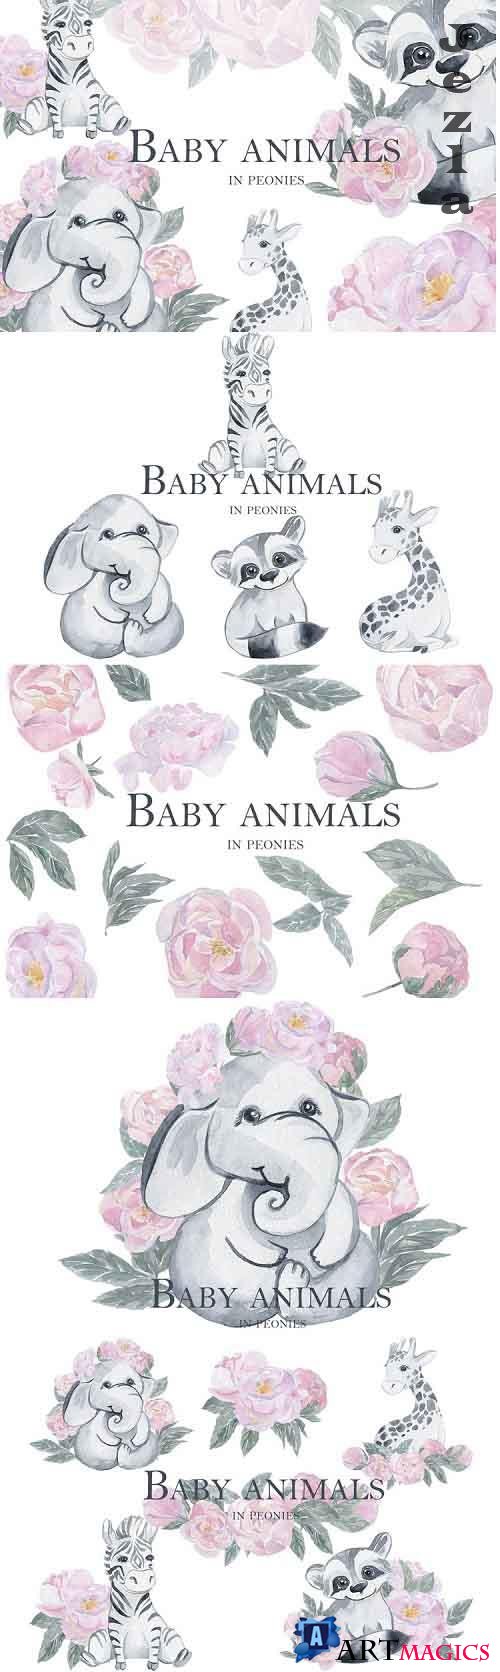 Baby animals in peonies - 816085